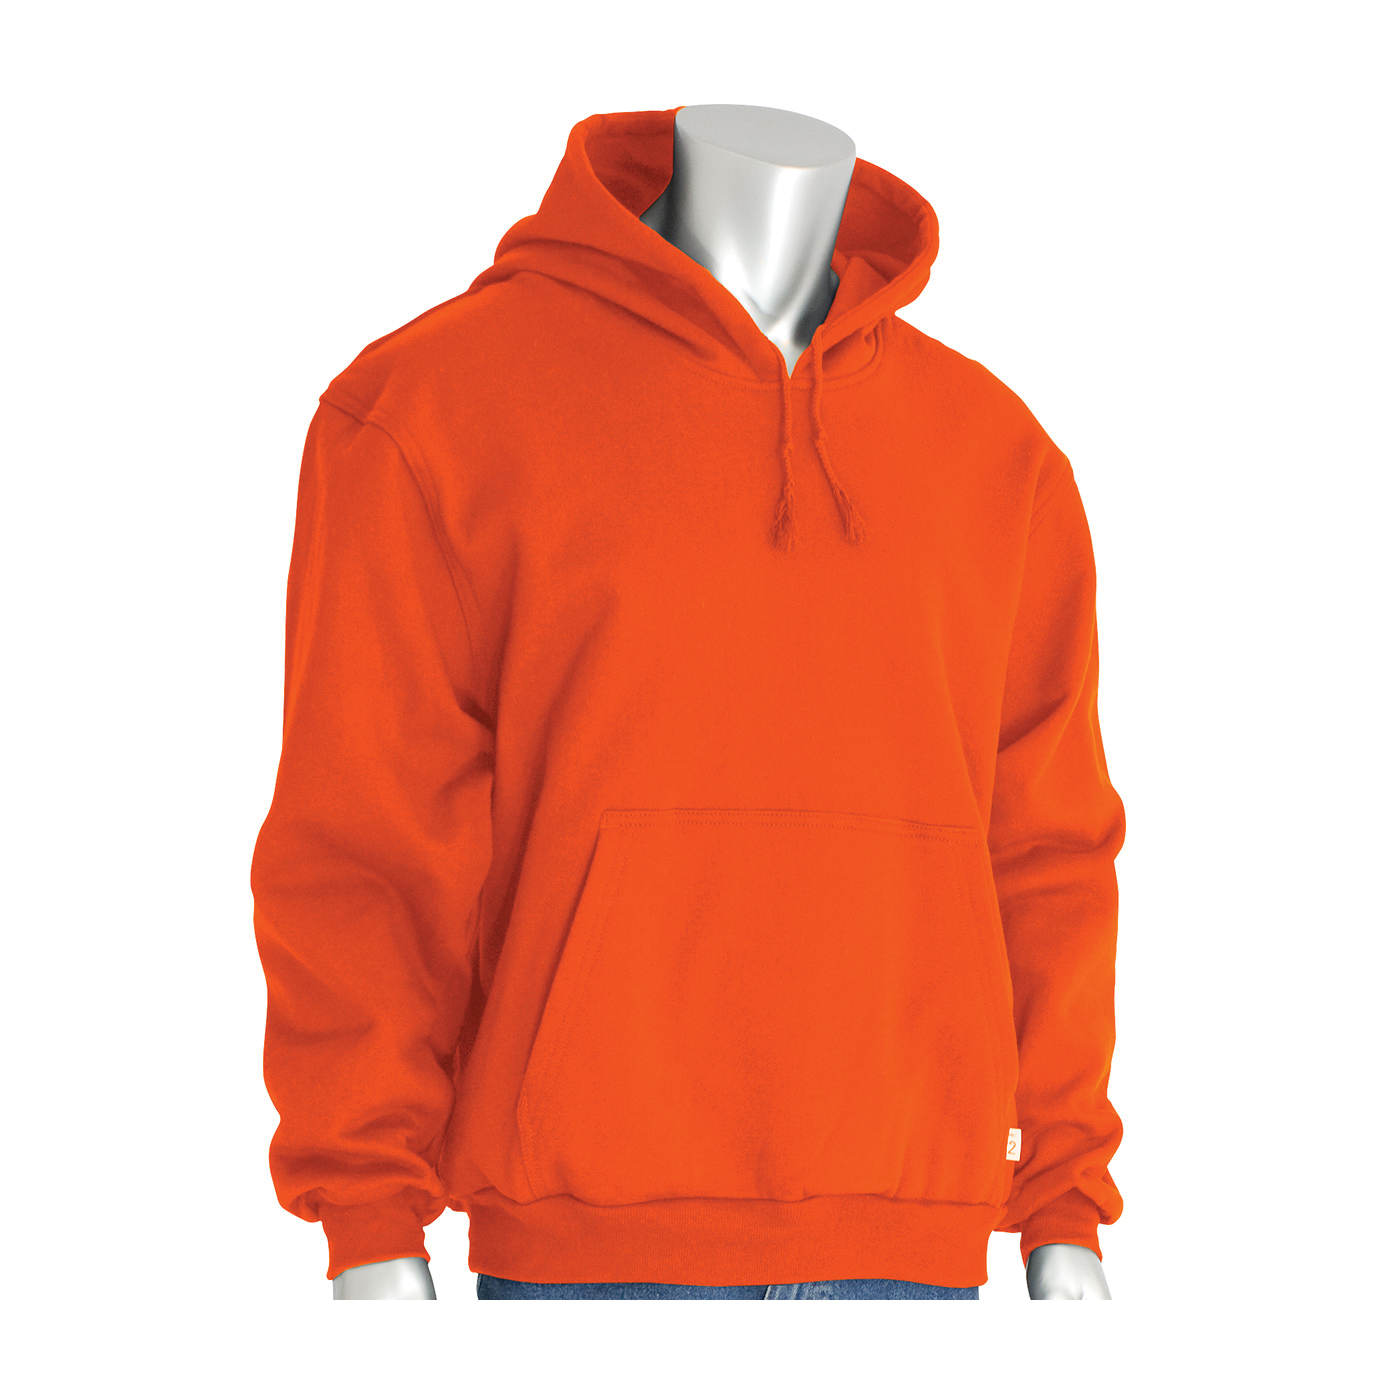 PIP® 385-FRPH-OR/XL Polartec® 385-FRPH Arc and Flame Resistant Sweatshirt, XL, Orange, FR Fleece Knit/100% Cotton, 32 in Regular, 33 in Tall L